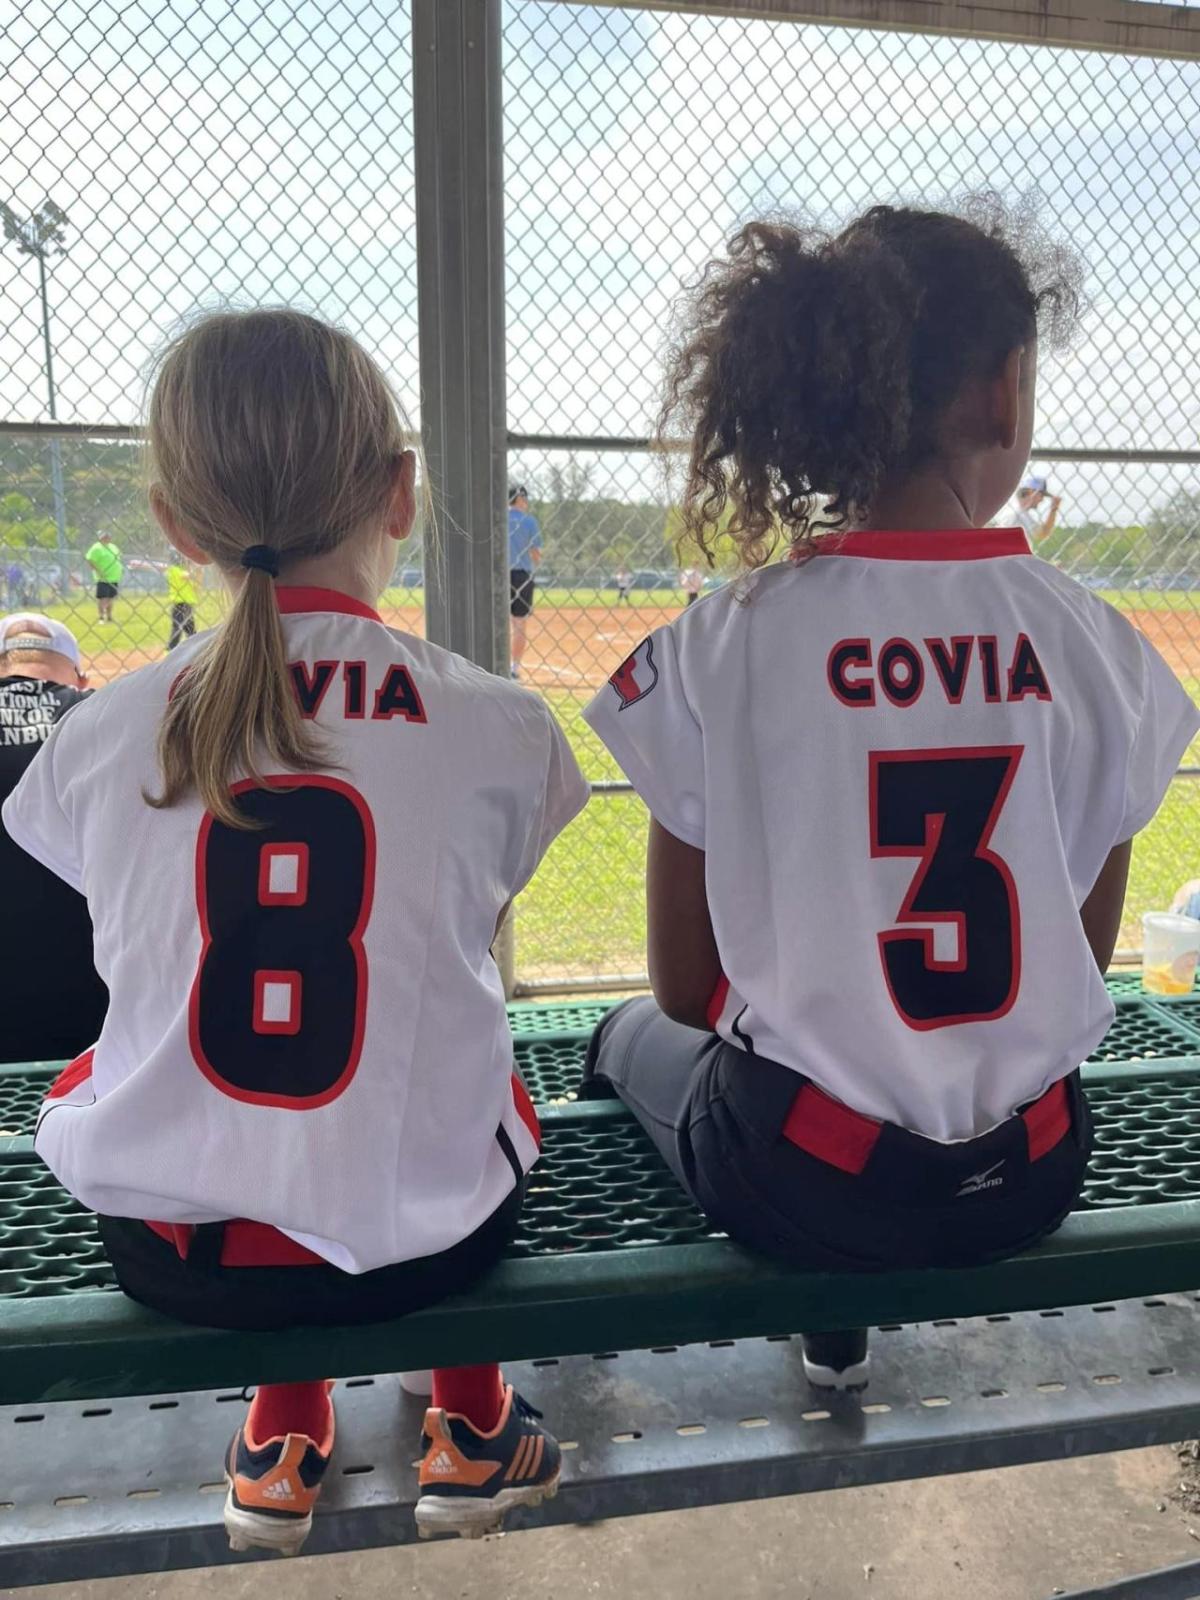 kids in Covia baseball uniforms